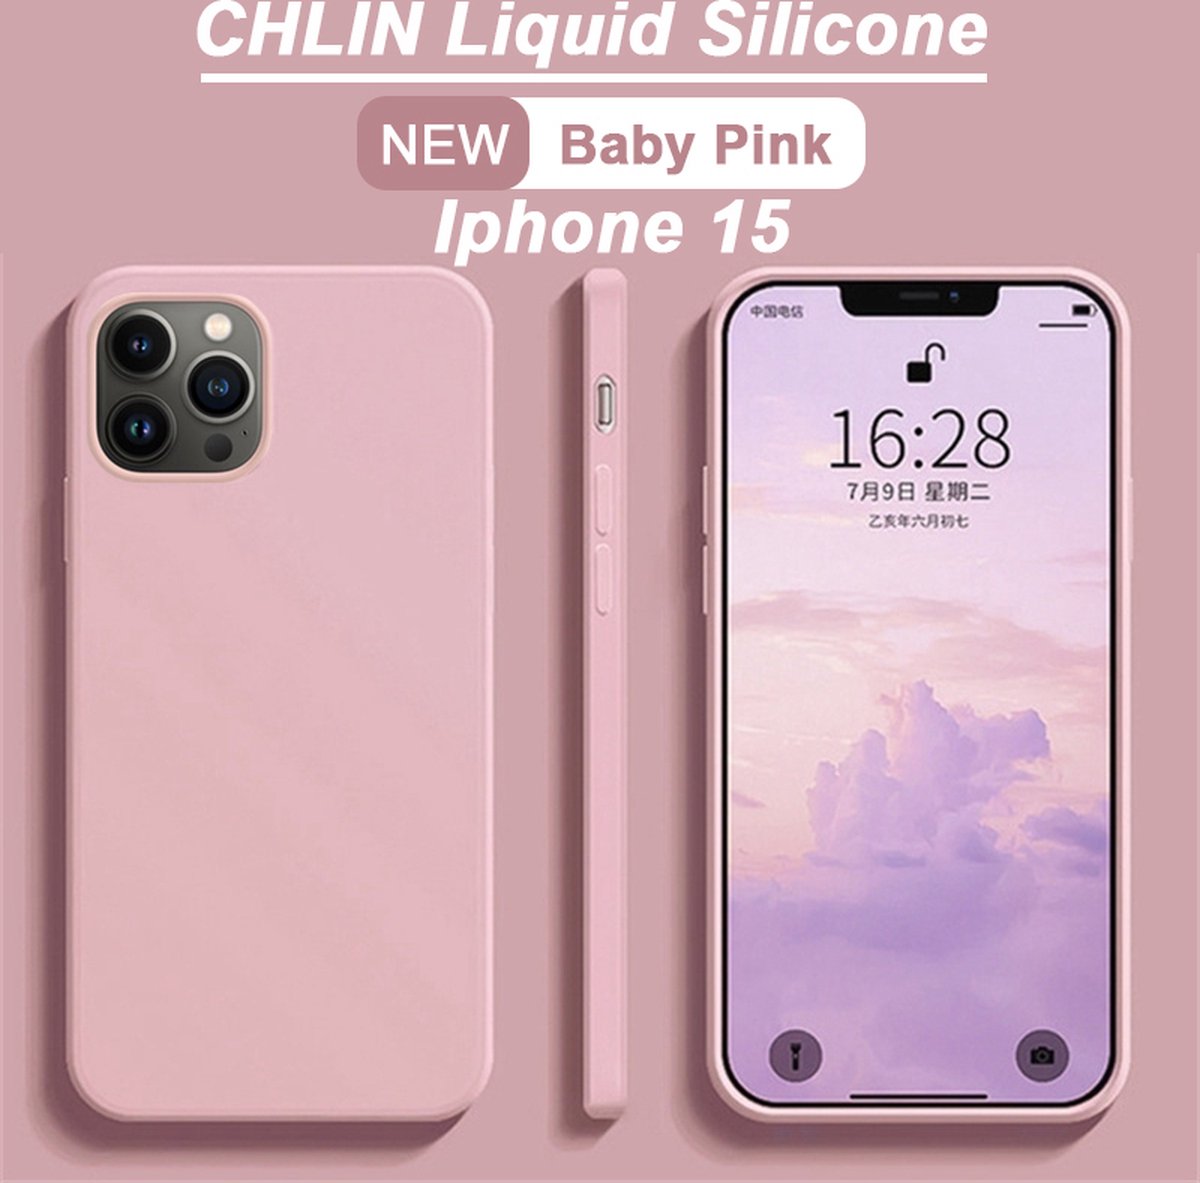 CL CHLIN® Premium Siliconen Case Iphone 15 Roze - Iphone 15 hoesje - Iphone 15 case - Iphone 15 hoes - Silicone hoesje - Iphone 15 protection - Iphone 15 protector